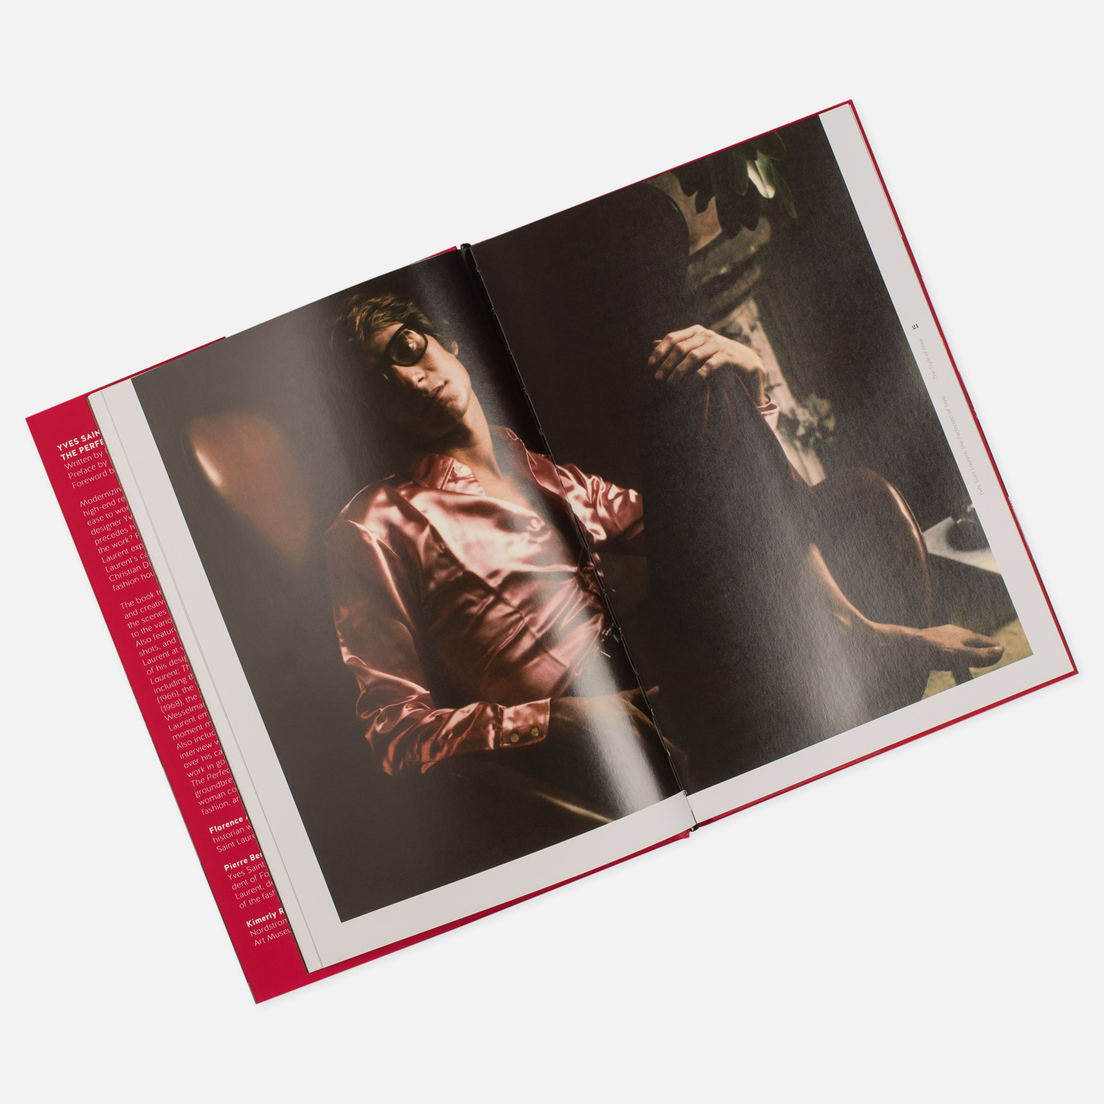 Rizzoli Книга Yves Saint Laurent: The Perfection Of Style